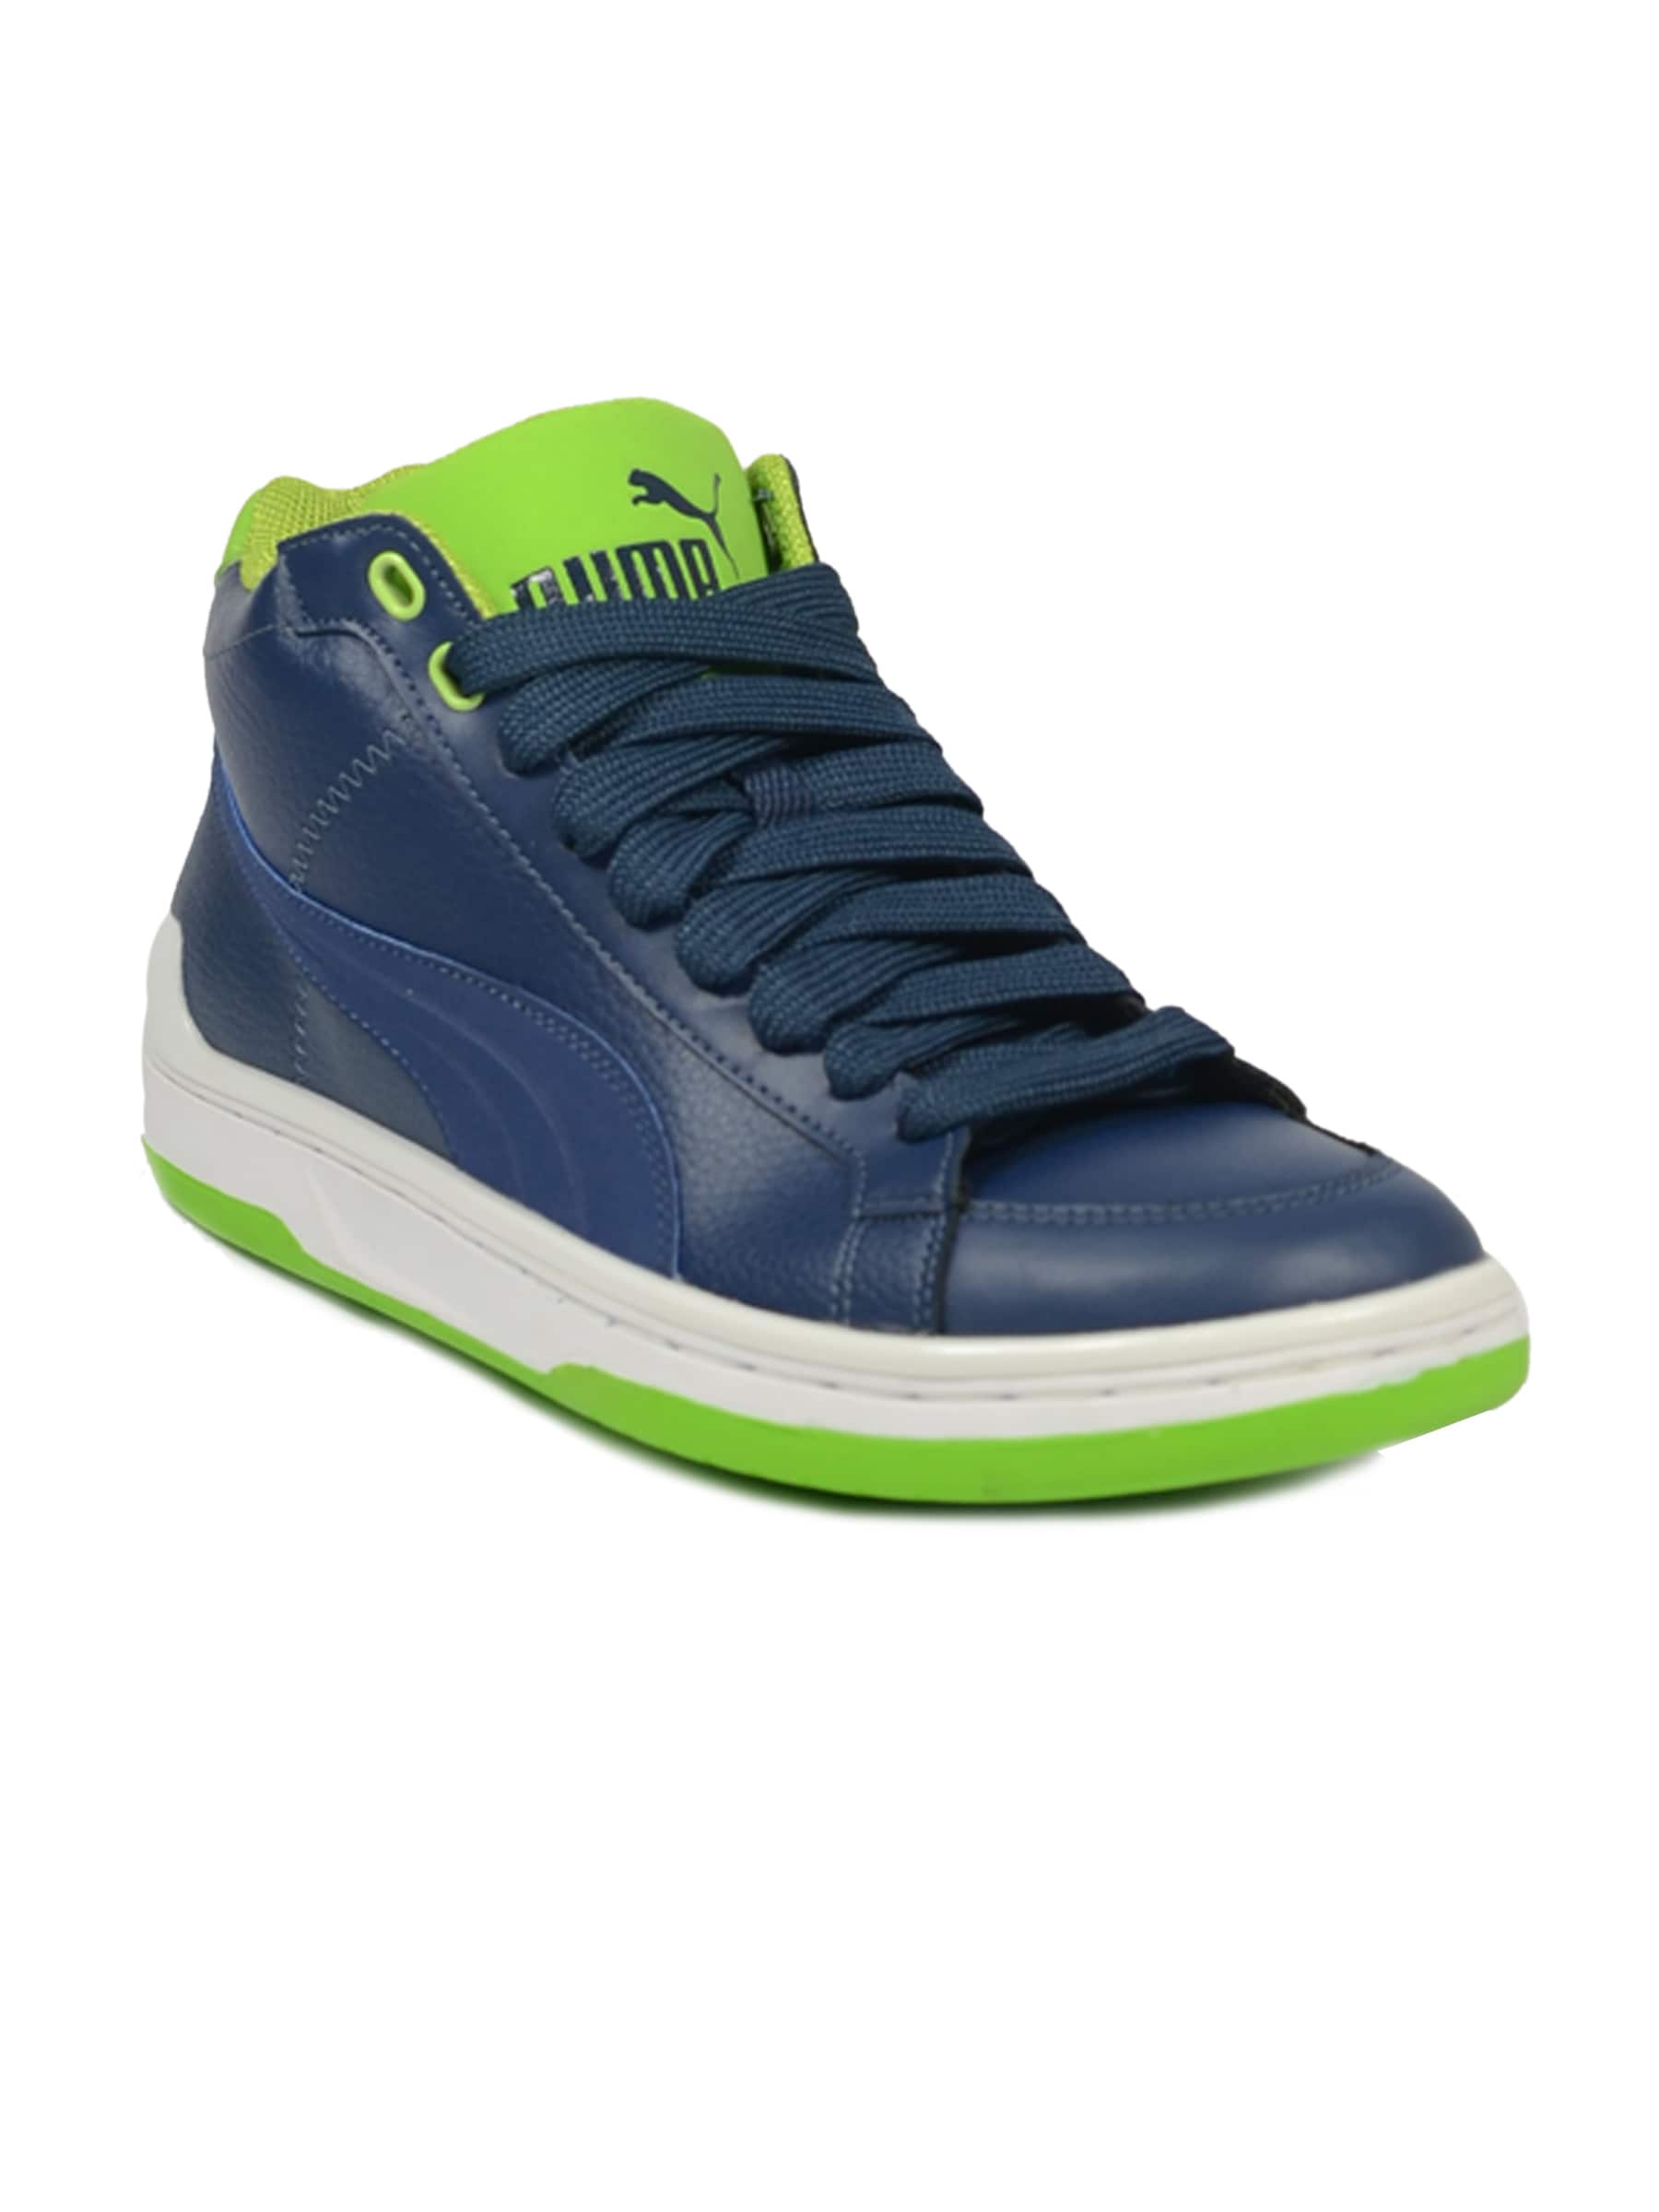 Puma Men's Mid Evo Leather Blue Pattot Green Shoe